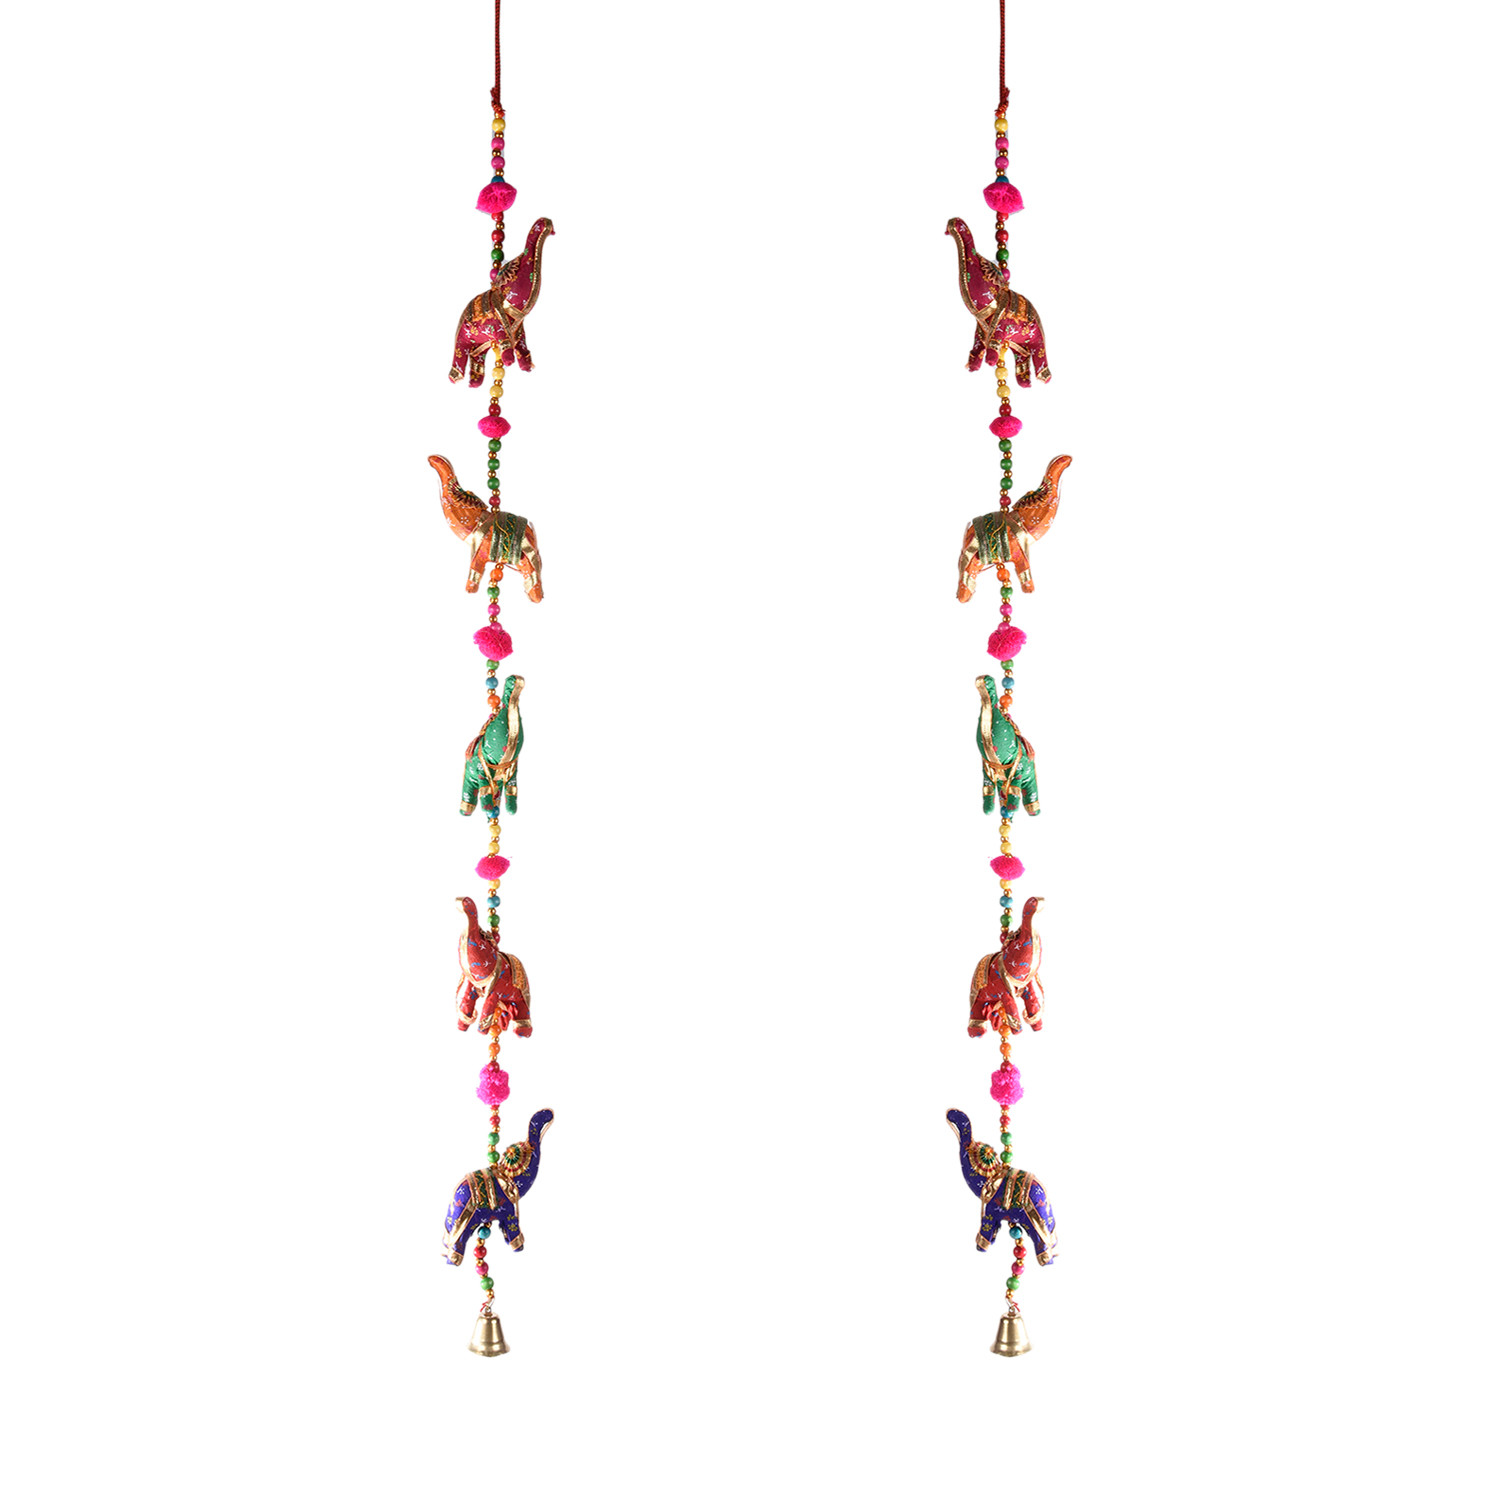 Kuber Industries Rajasthani Traditional Windchimes|5 Hanging Elephants|Polyester Handcrafted Latkan|Decorative Door Hanging Latkan (Multicolor)